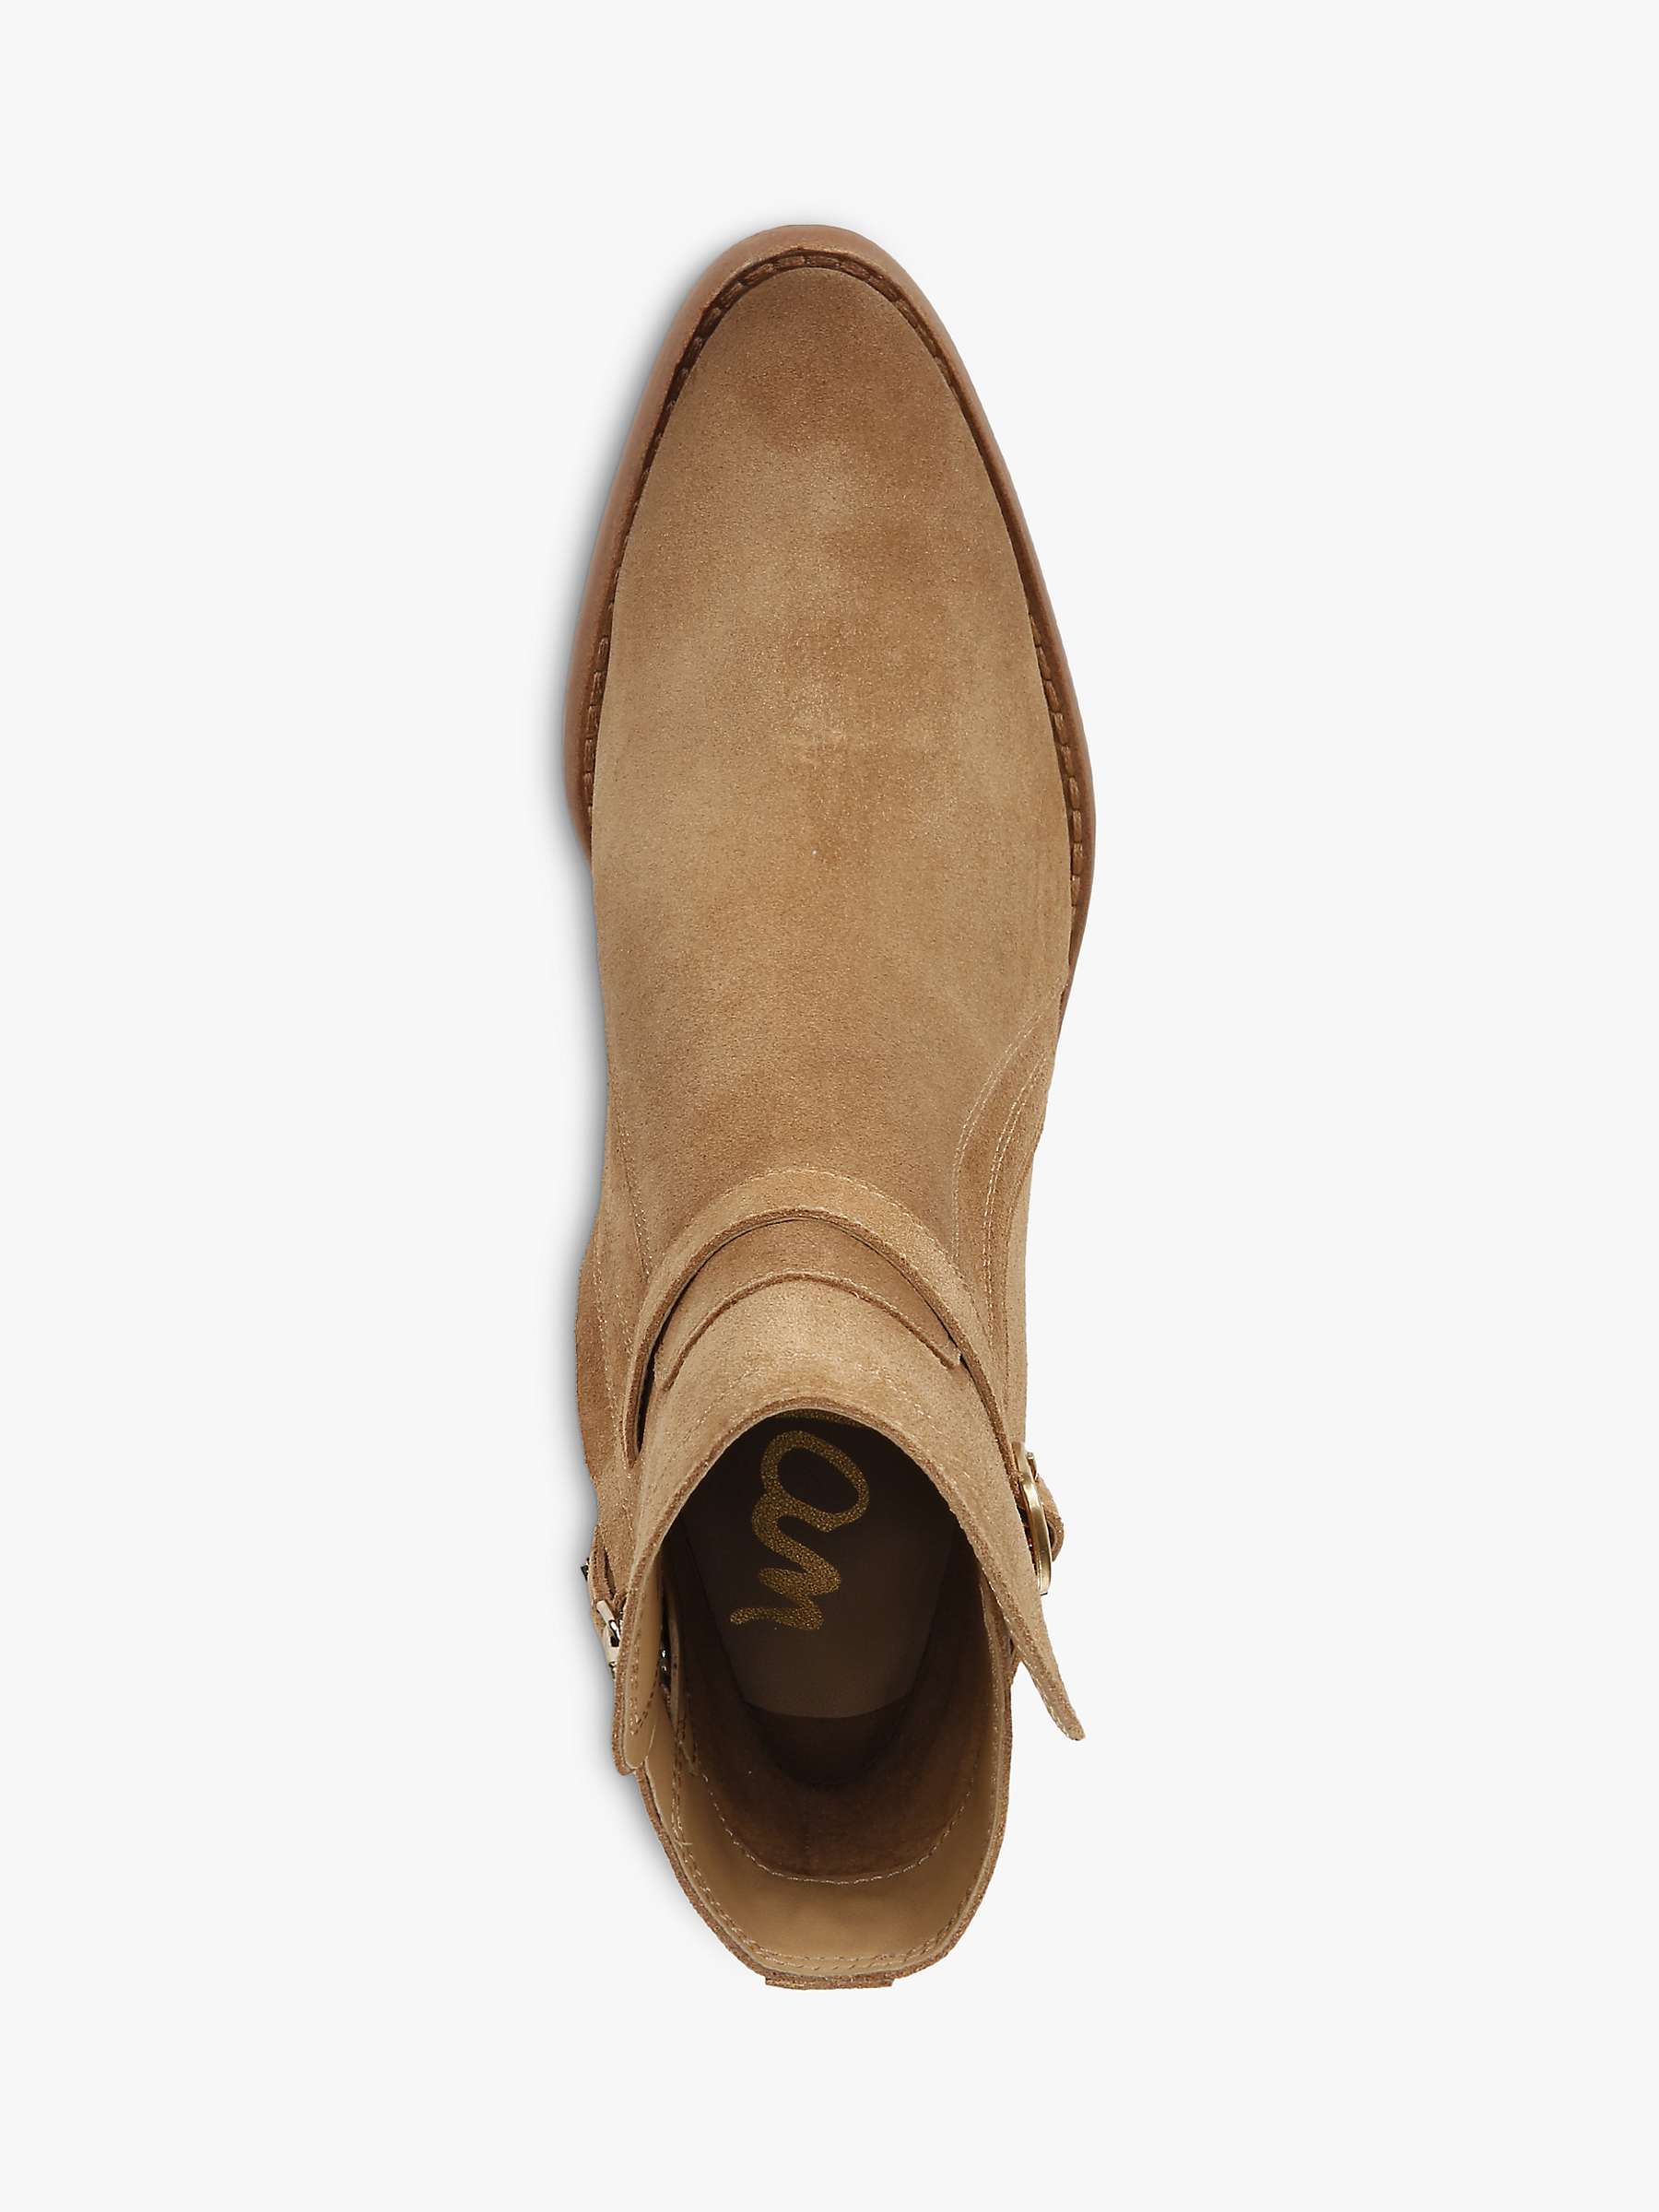 Buy Sam Edelman Simona Leather Ankle Boots, Golden Caramel Online at johnlewis.com